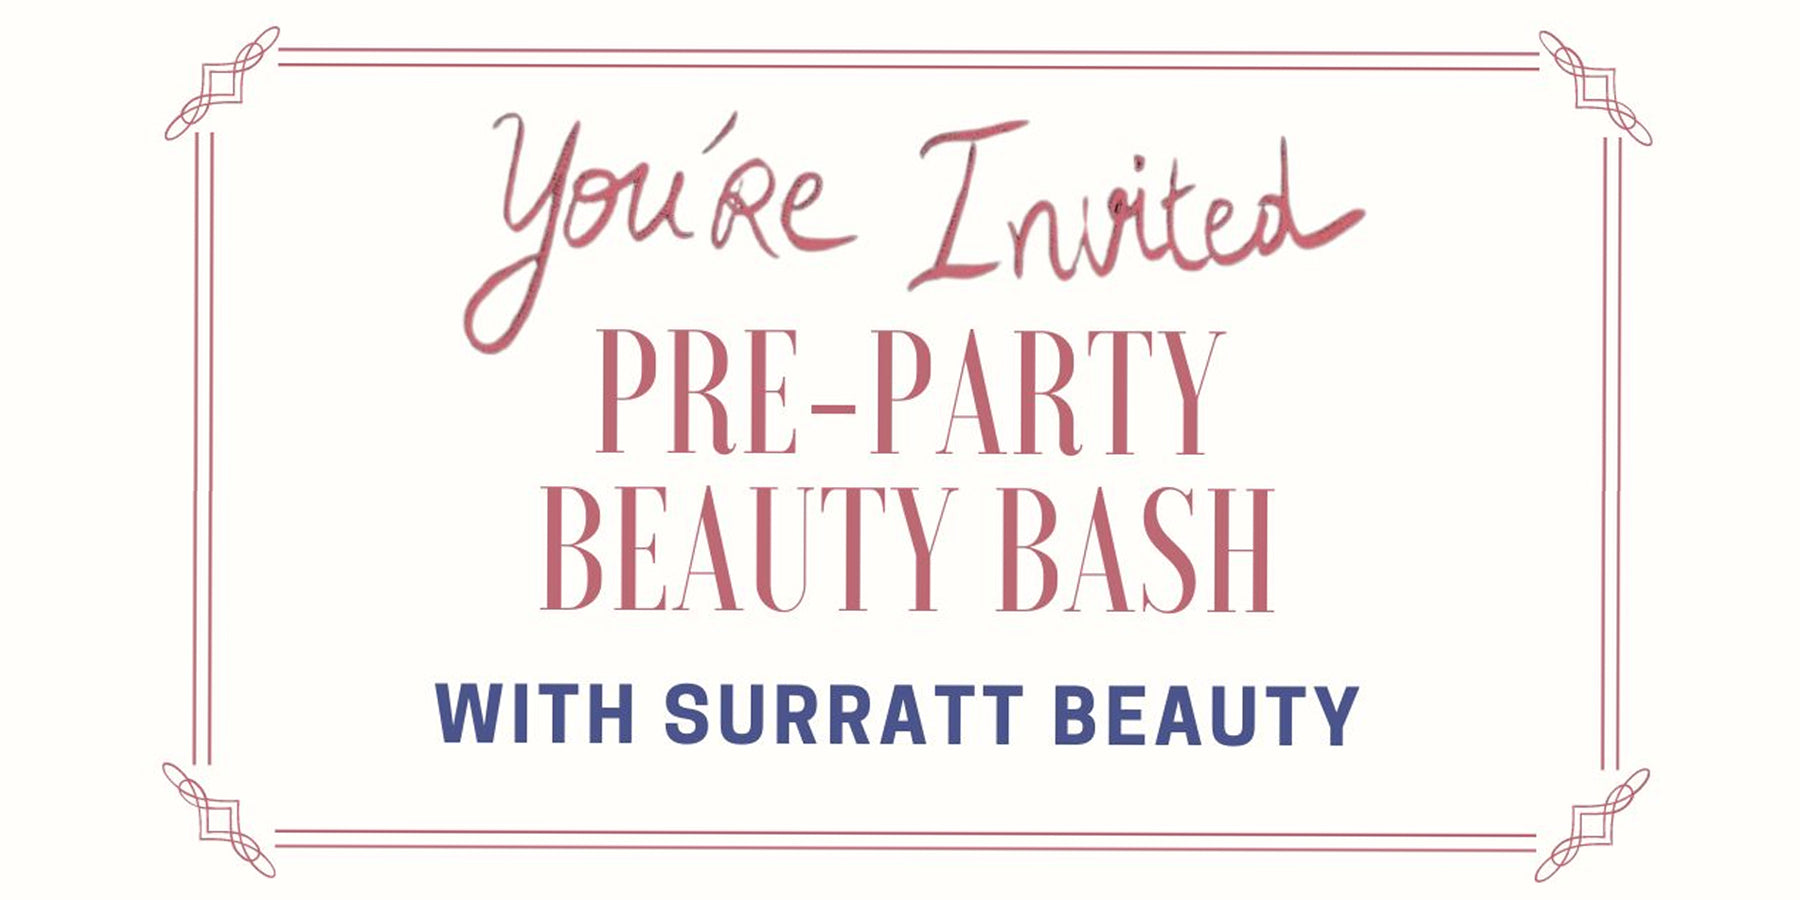 Pre-Party Beauty Bash With Surratt Beauty